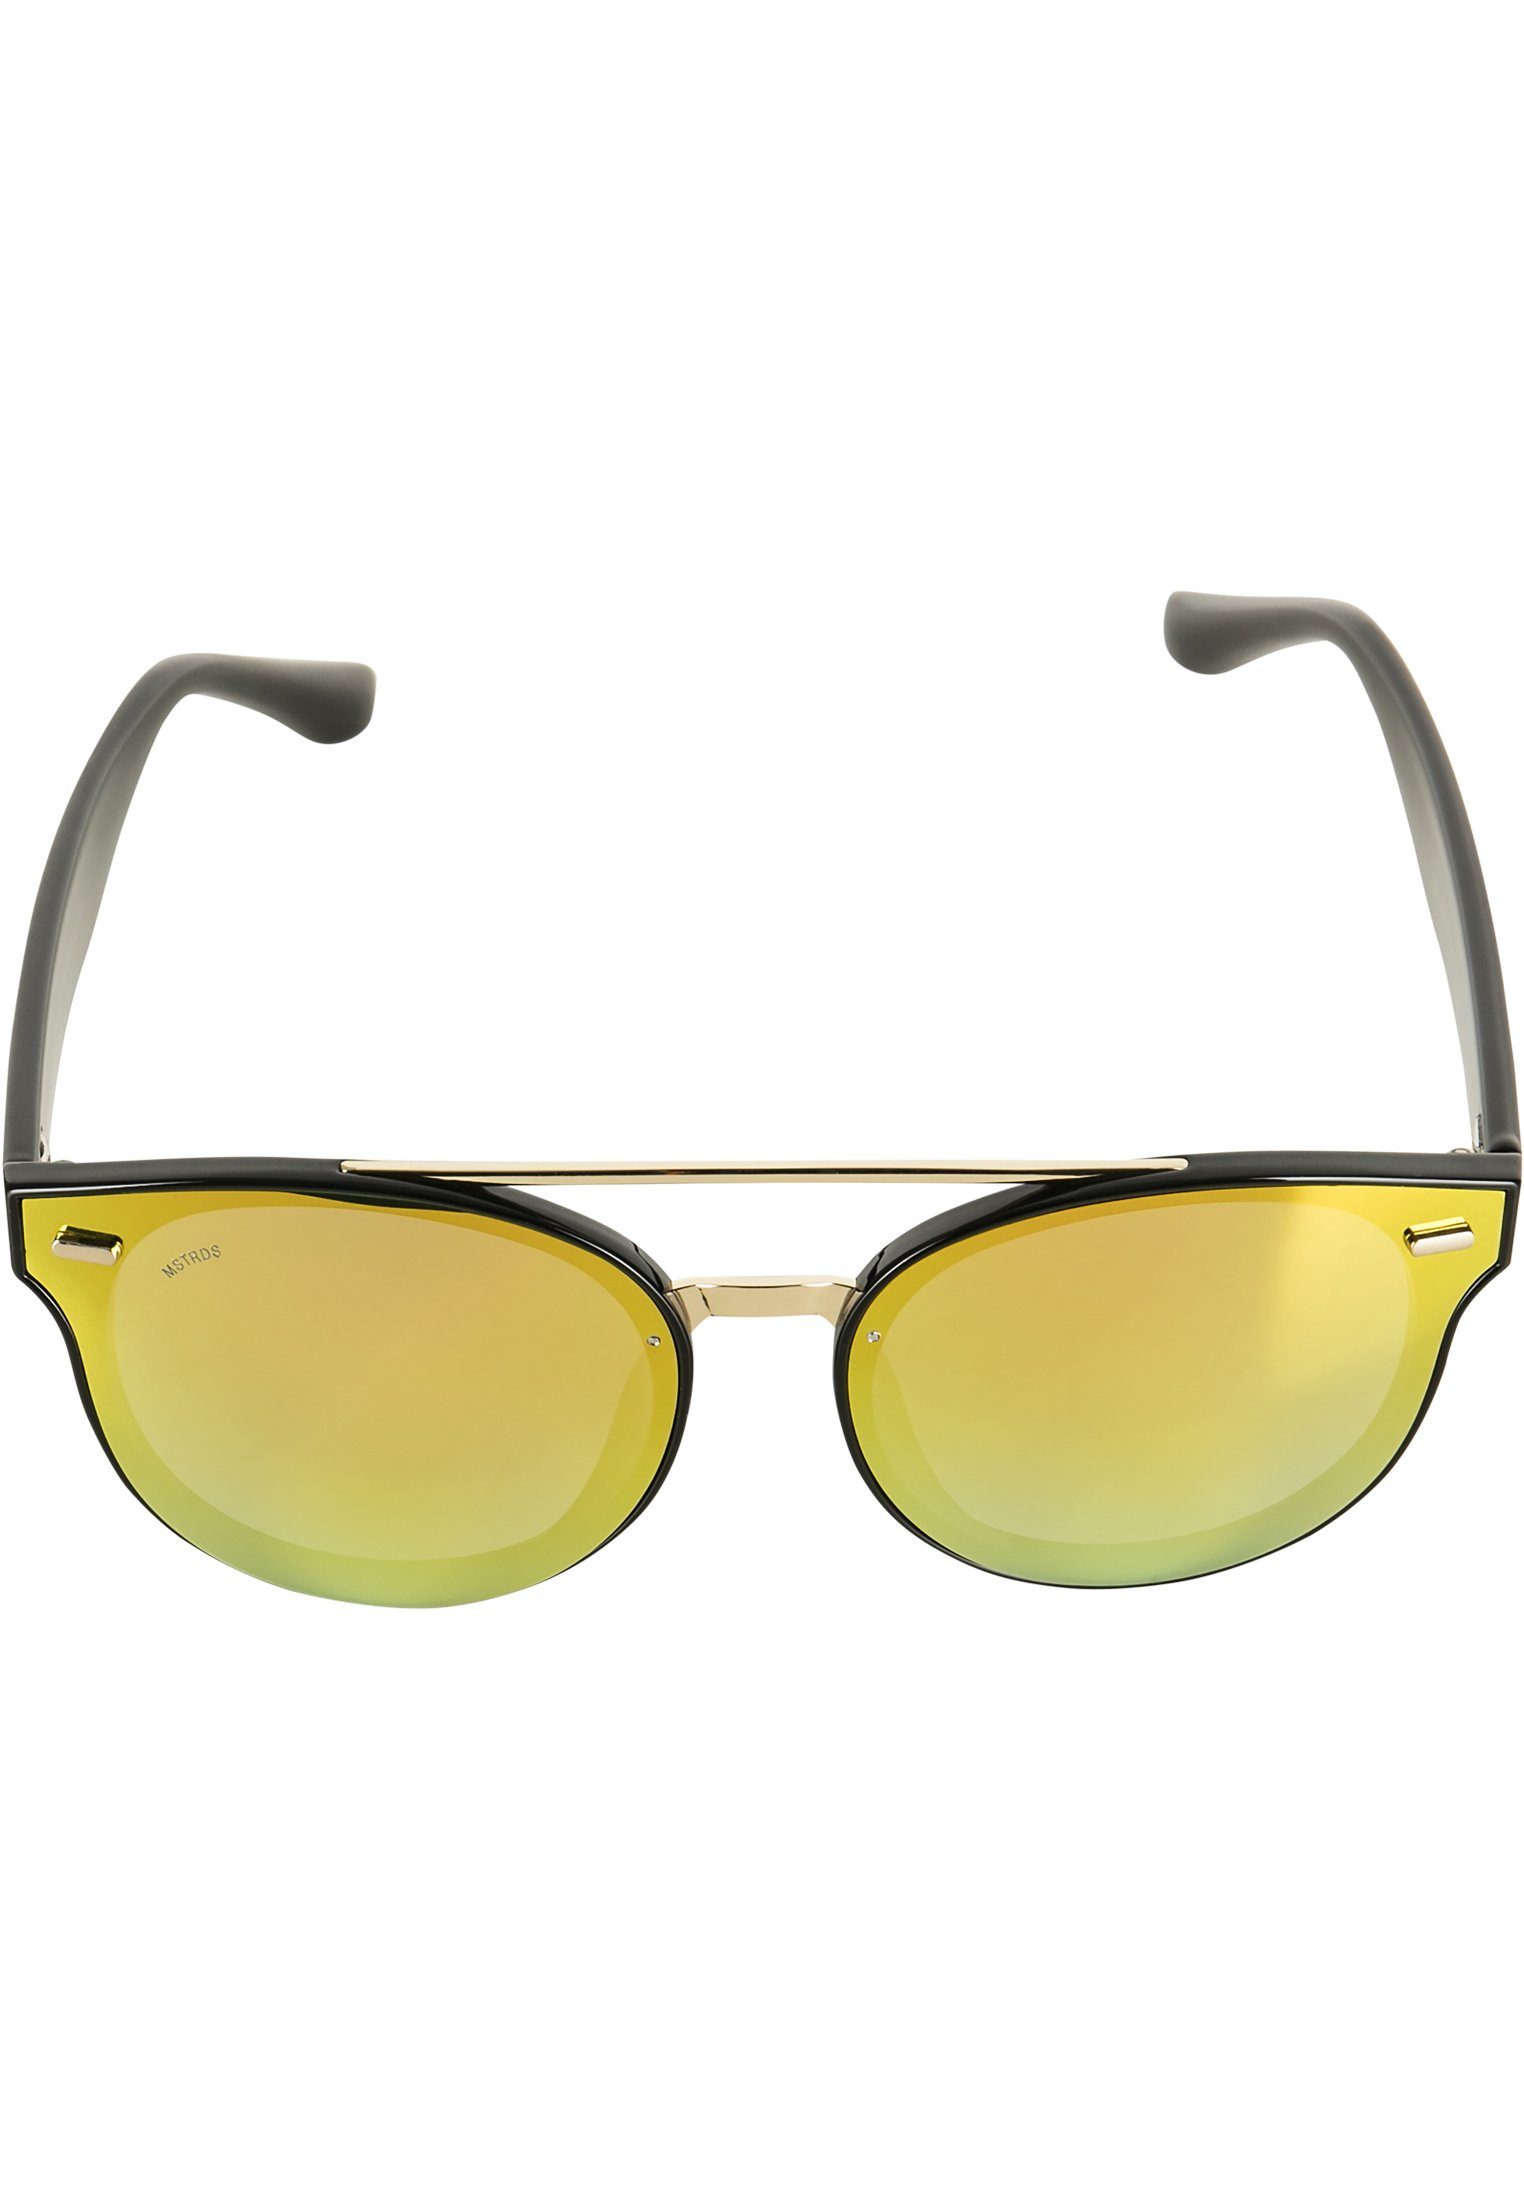 Super beliebt und 100 % Qualität garantiert! June Sunglasses Sonnenbrille Accessoires MSTRDS